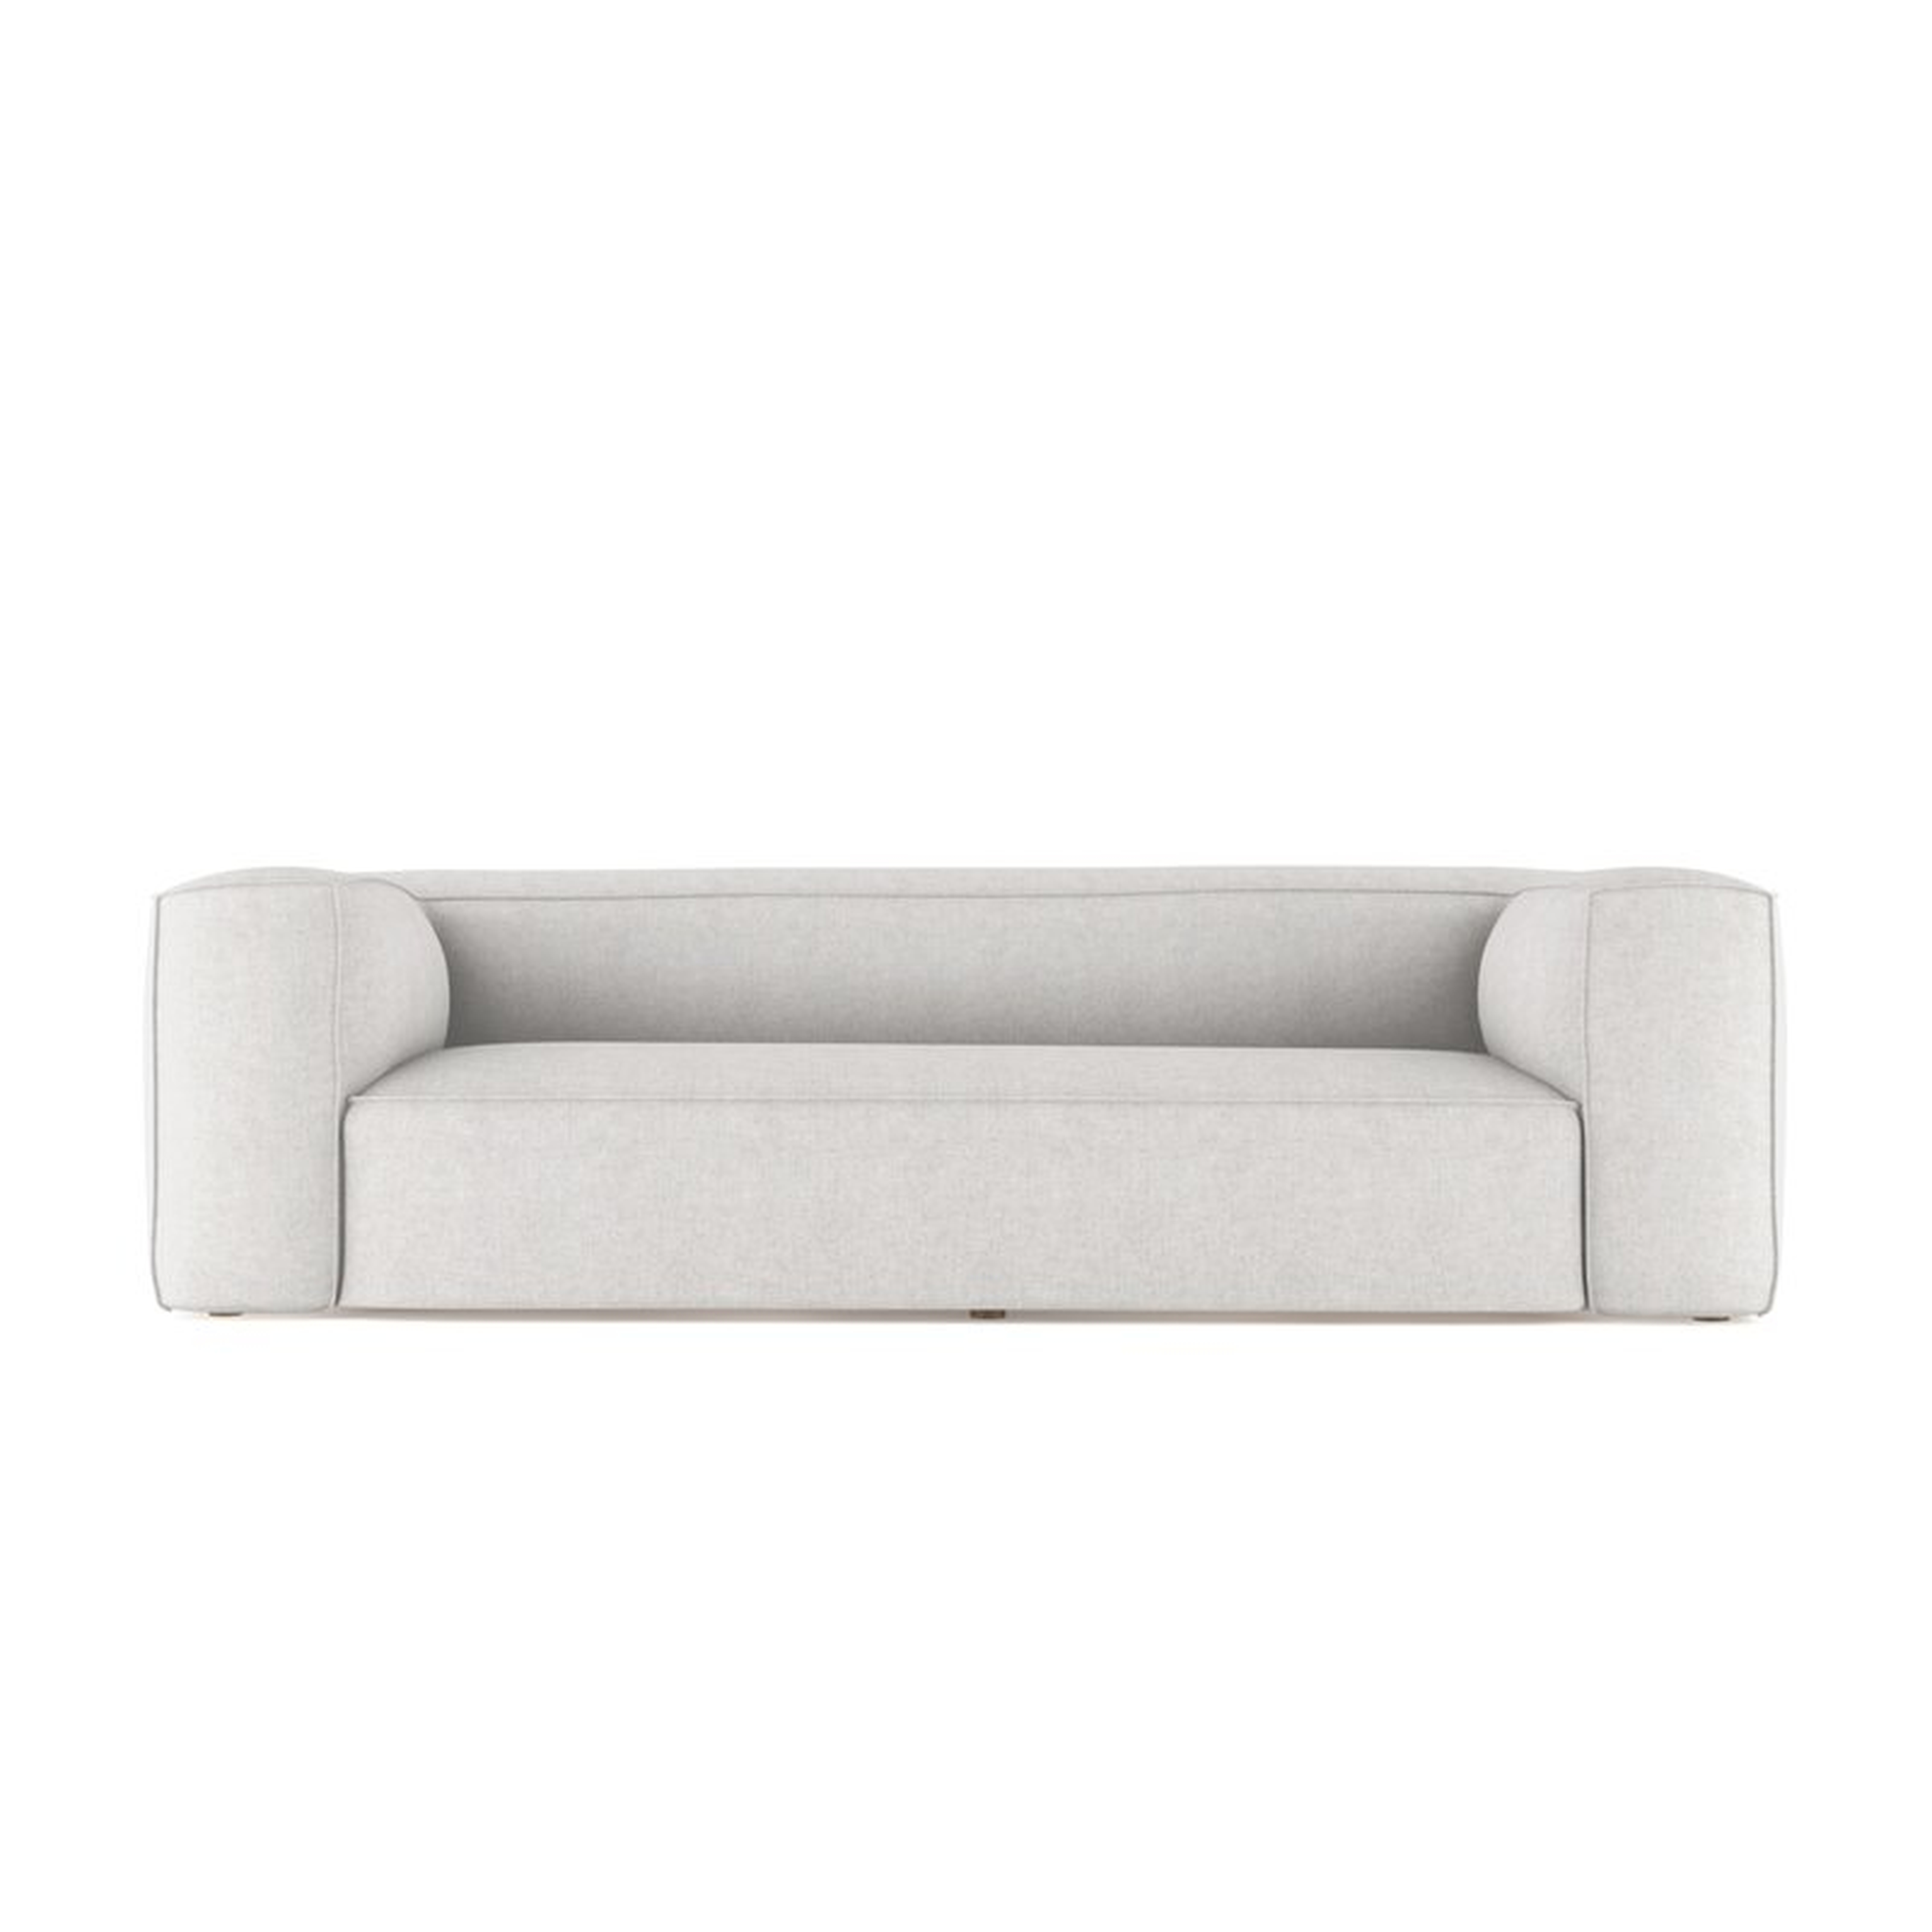 Tandem Arbor Bowery Sofa Upholstery: Velvet Silver Streak, Size: 30" H x 120" W x 47" D - Perigold